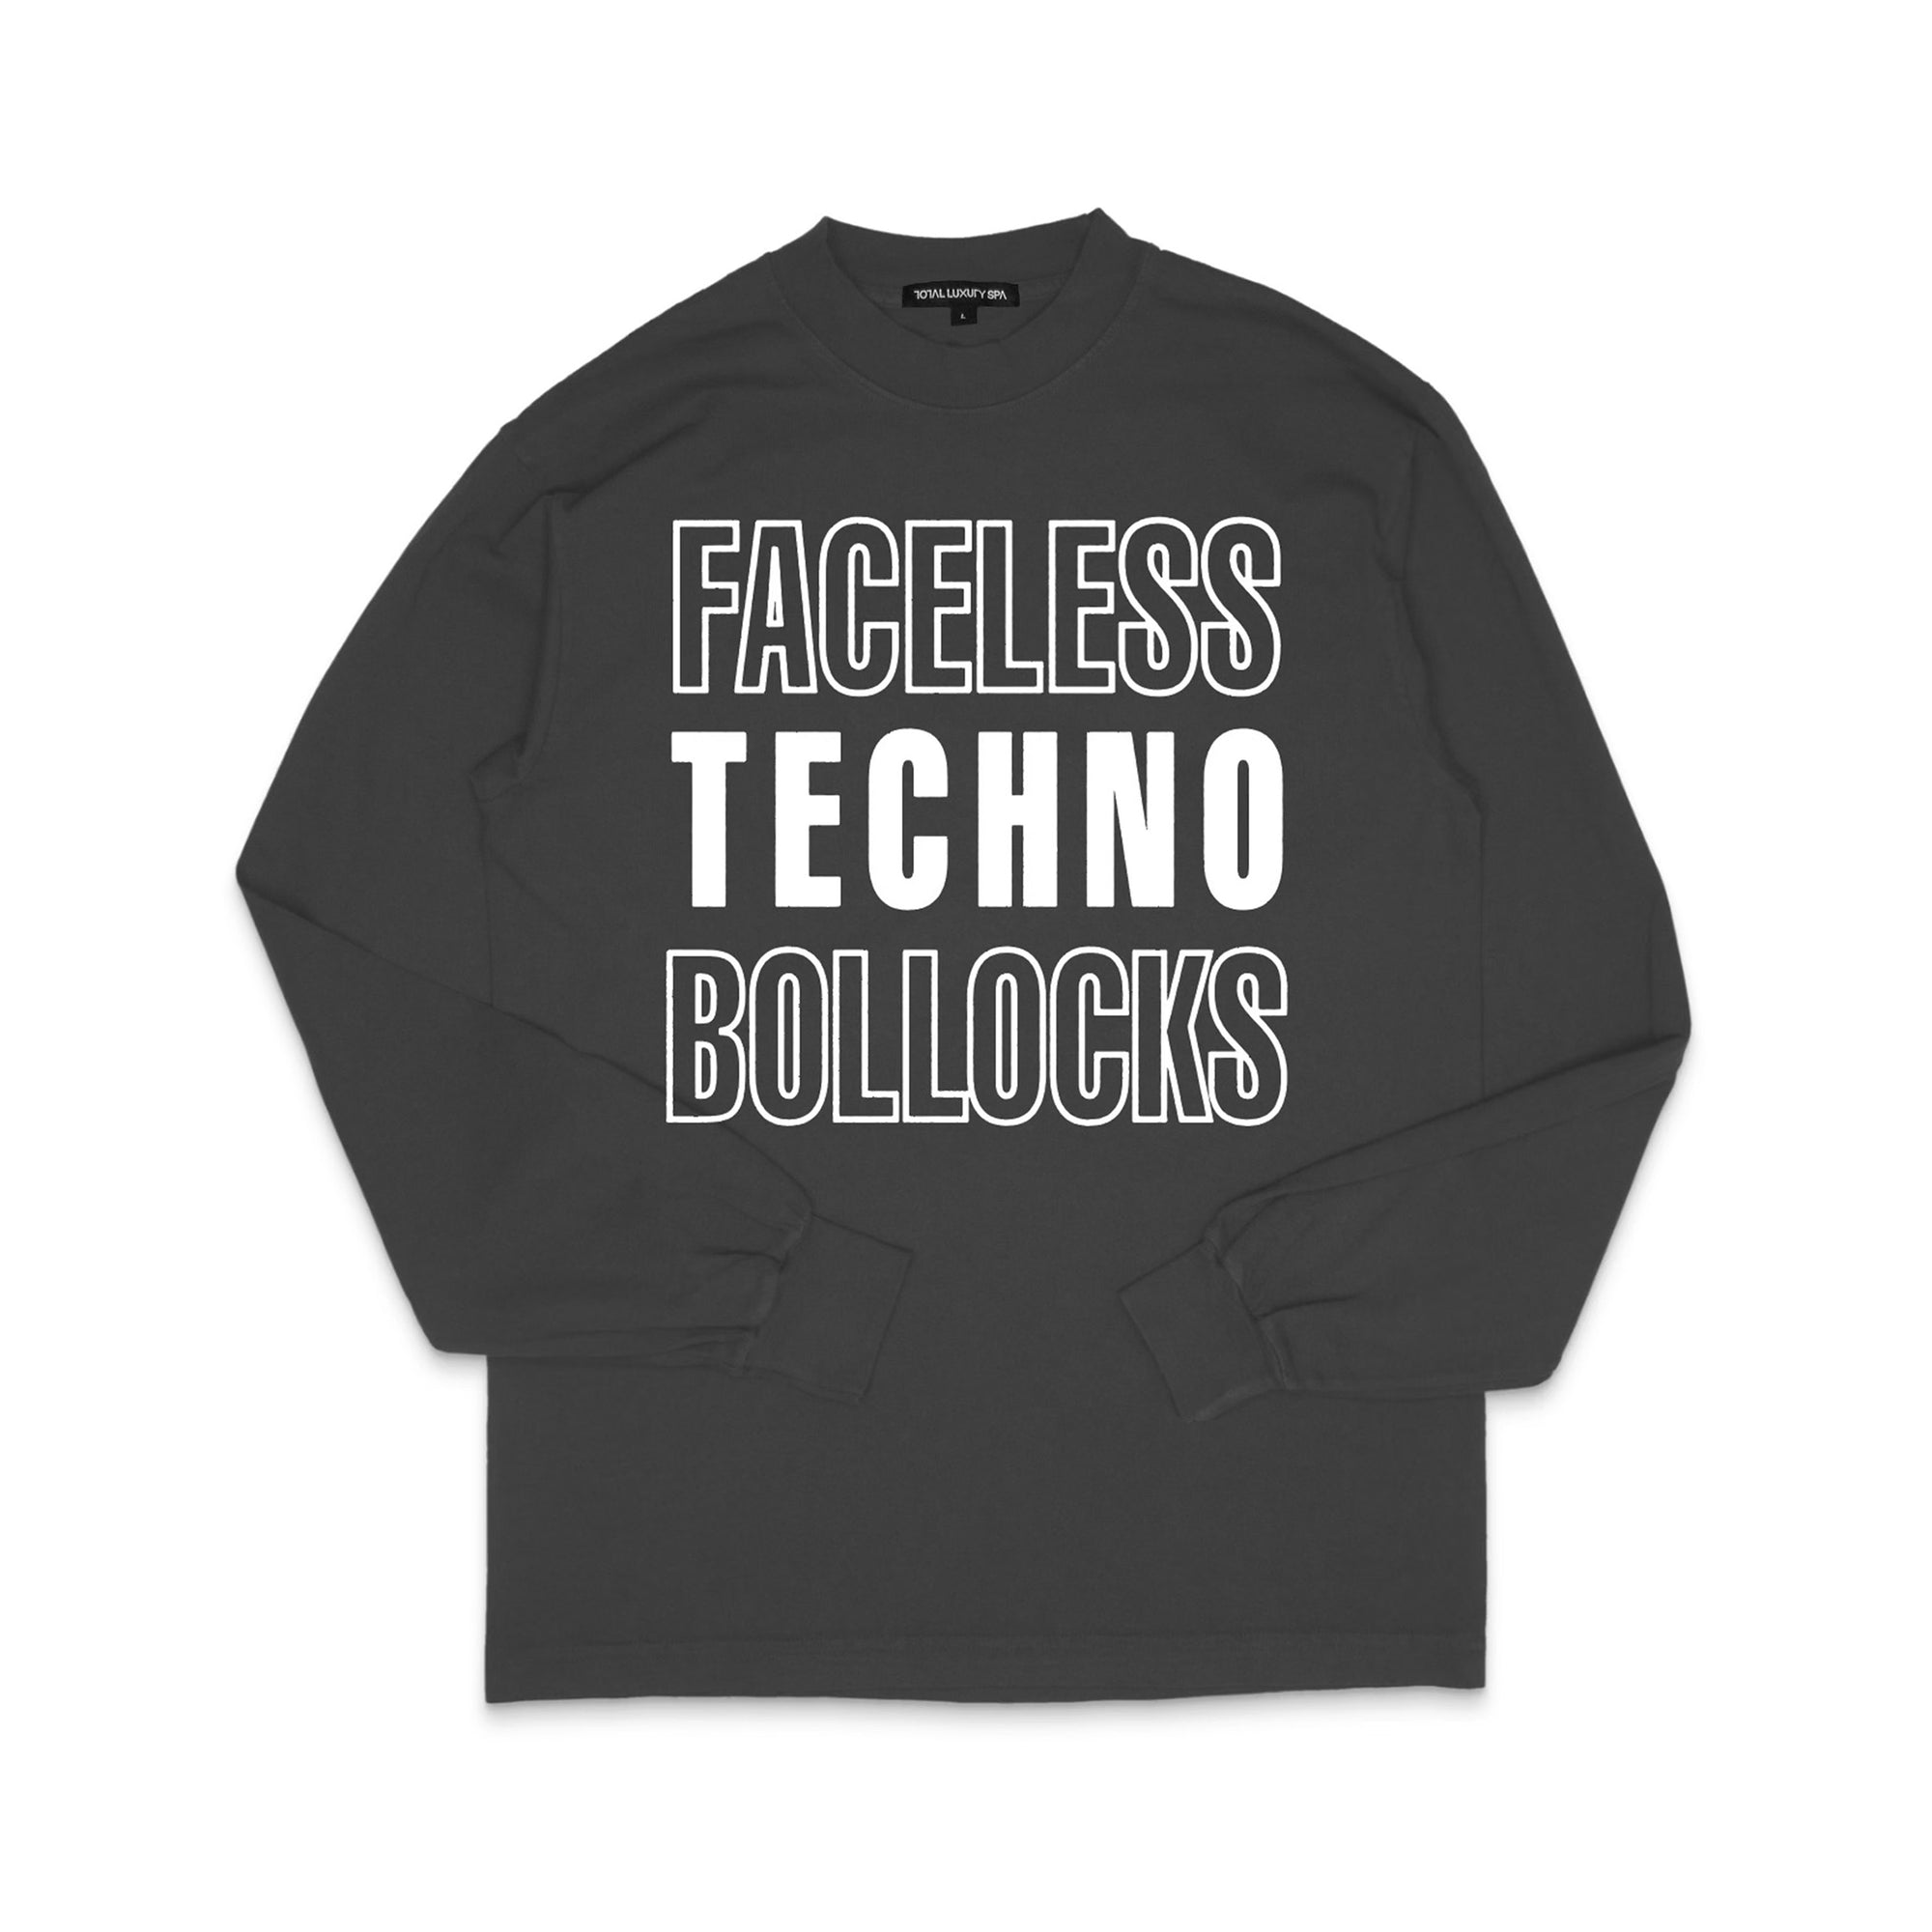 Total Luxury Spa - Men's Faceless Techno Bollocks T-Shirt - (Black) view 1